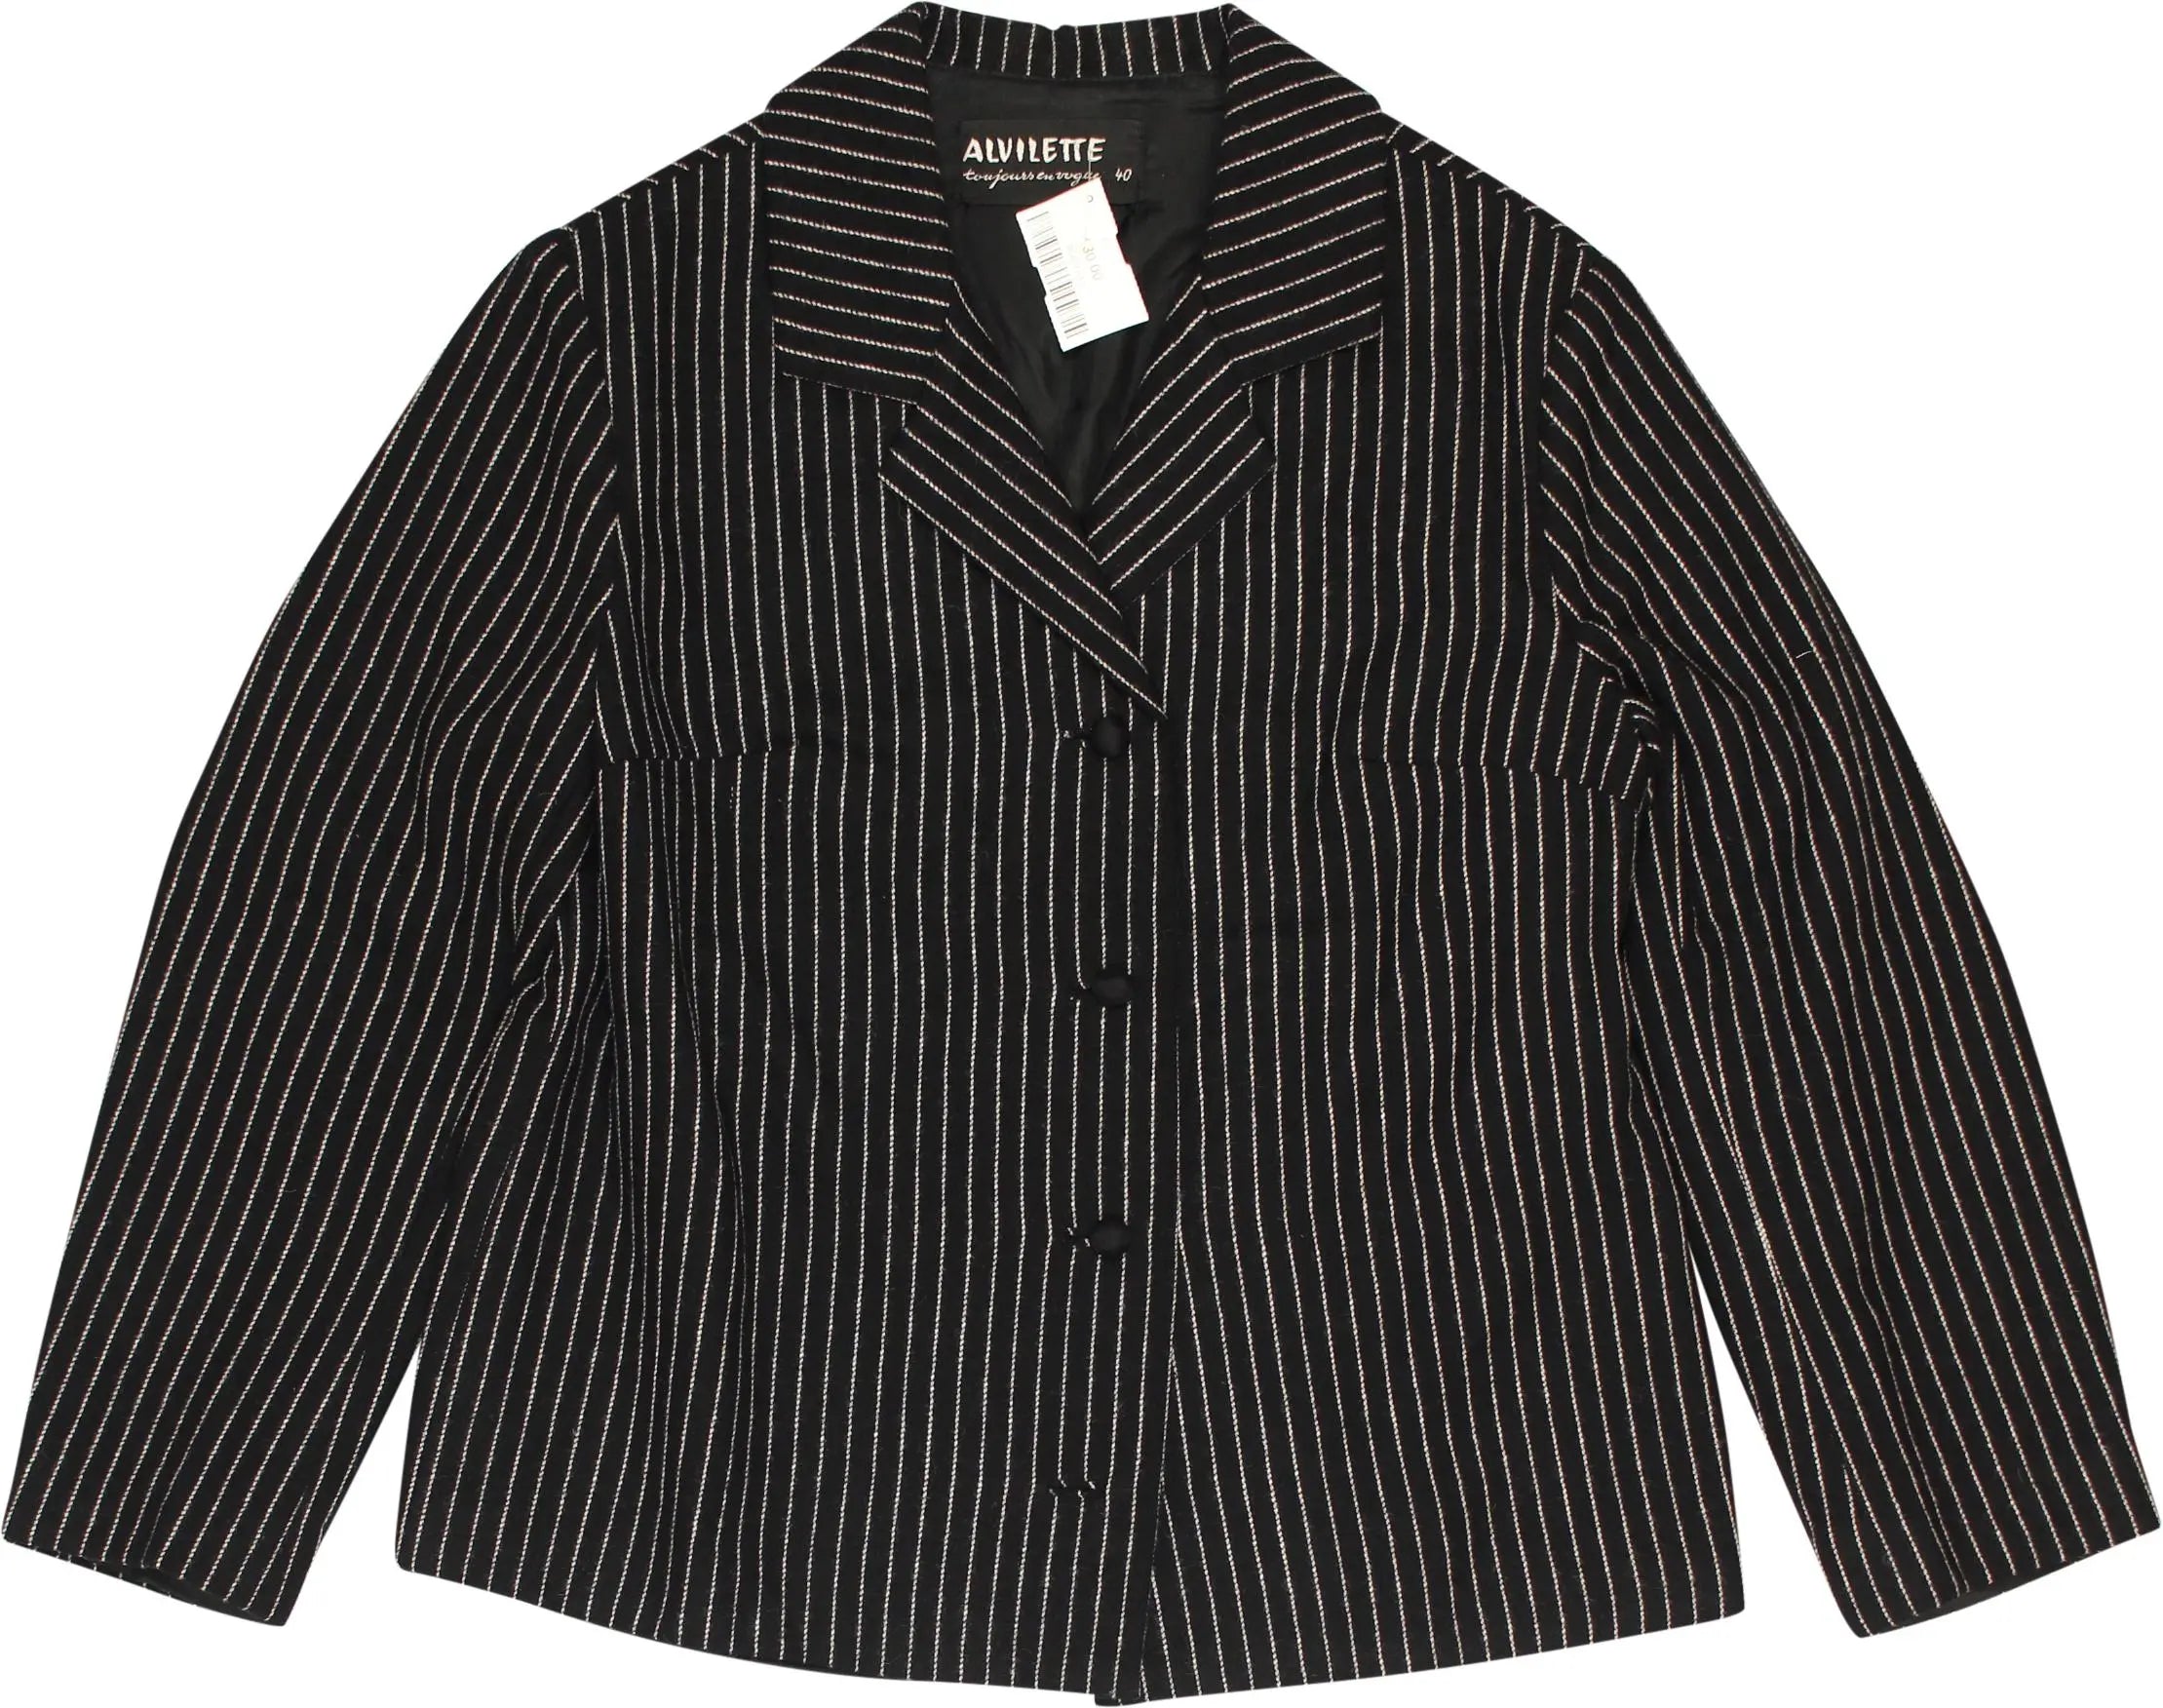 Alvilette - Striped Blazer- ThriftTale.com - Vintage and second handclothing